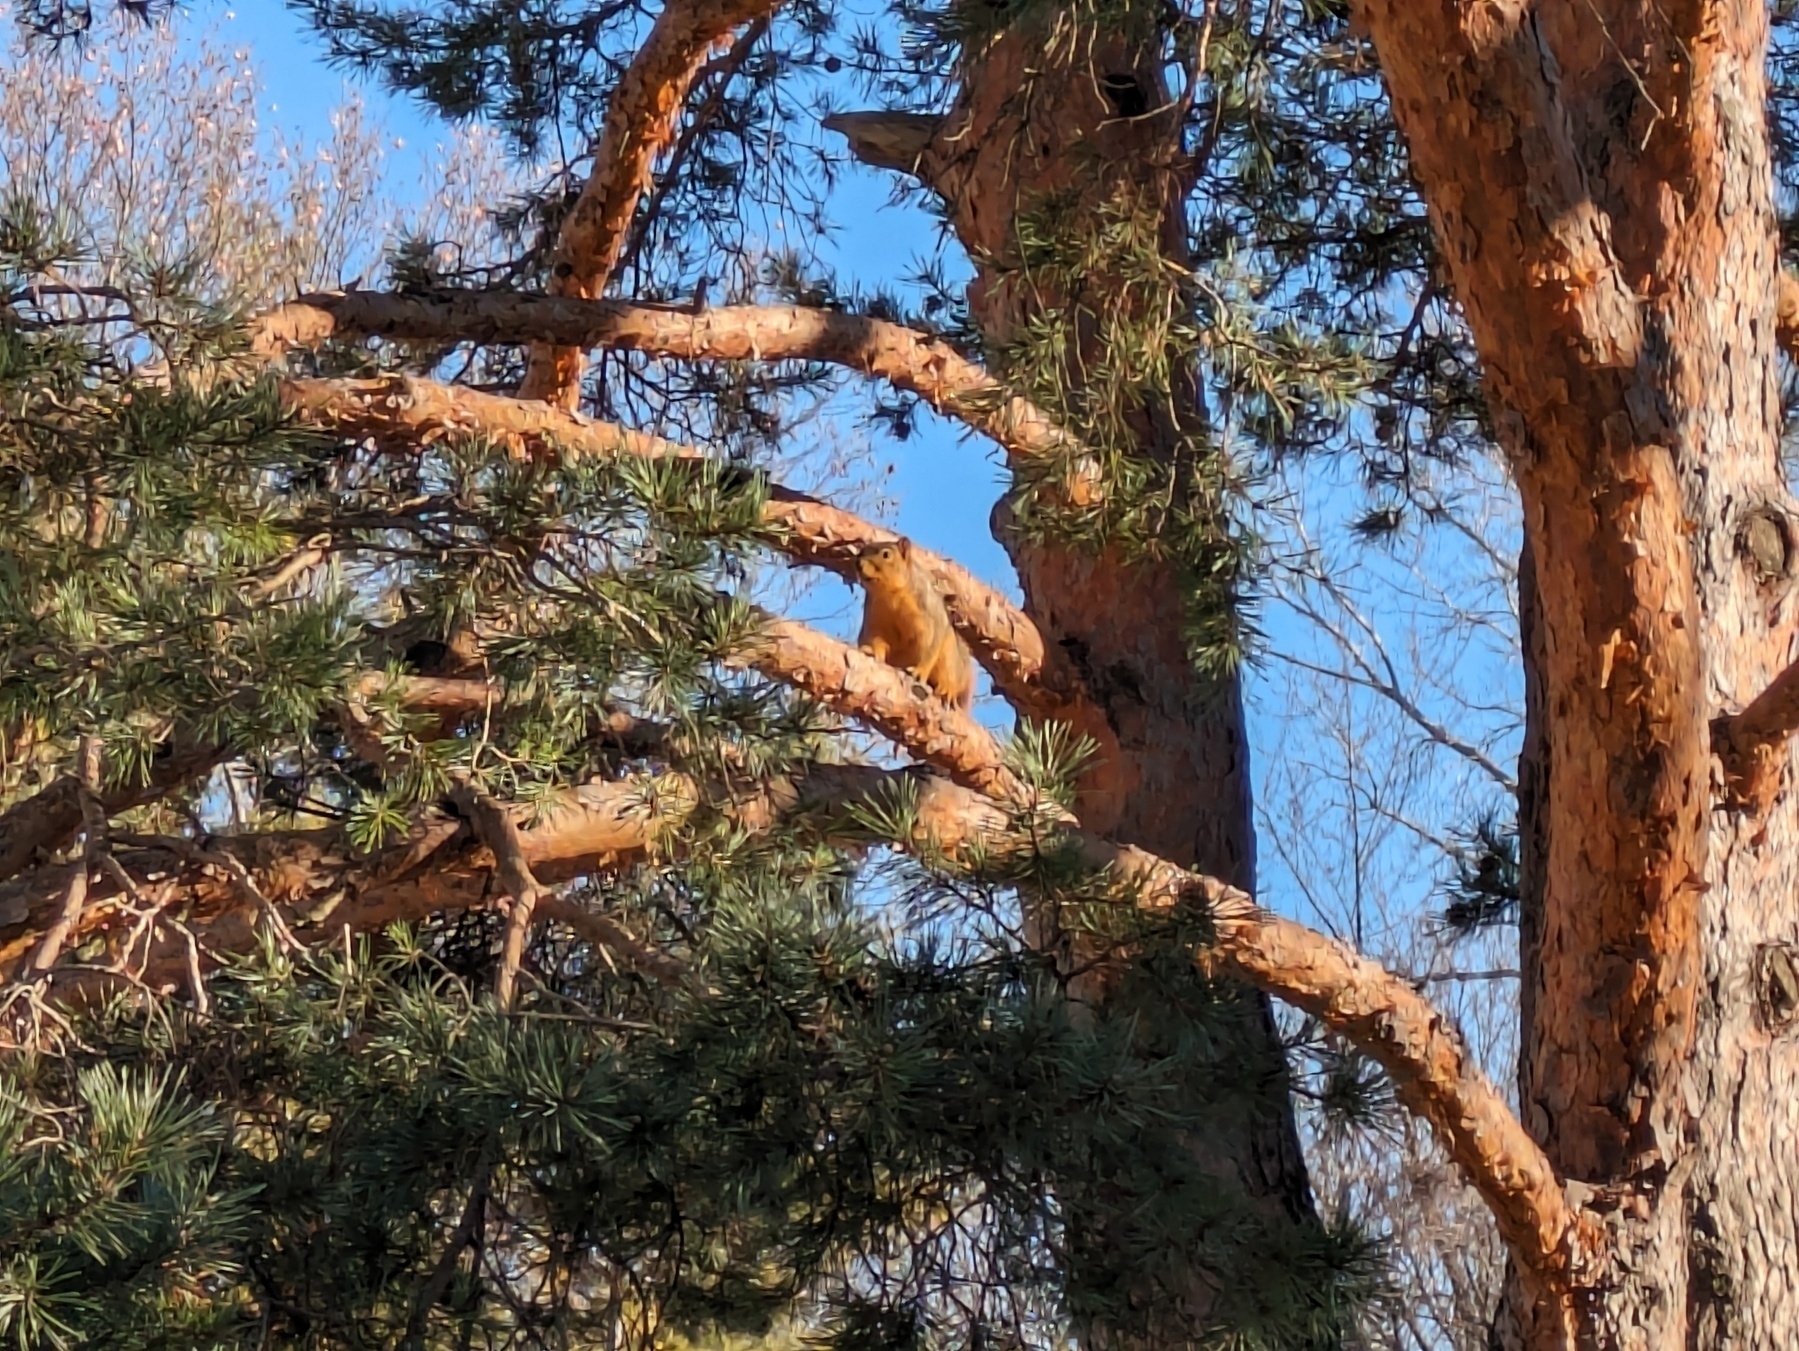 Brown fox squirrel on a tree limb